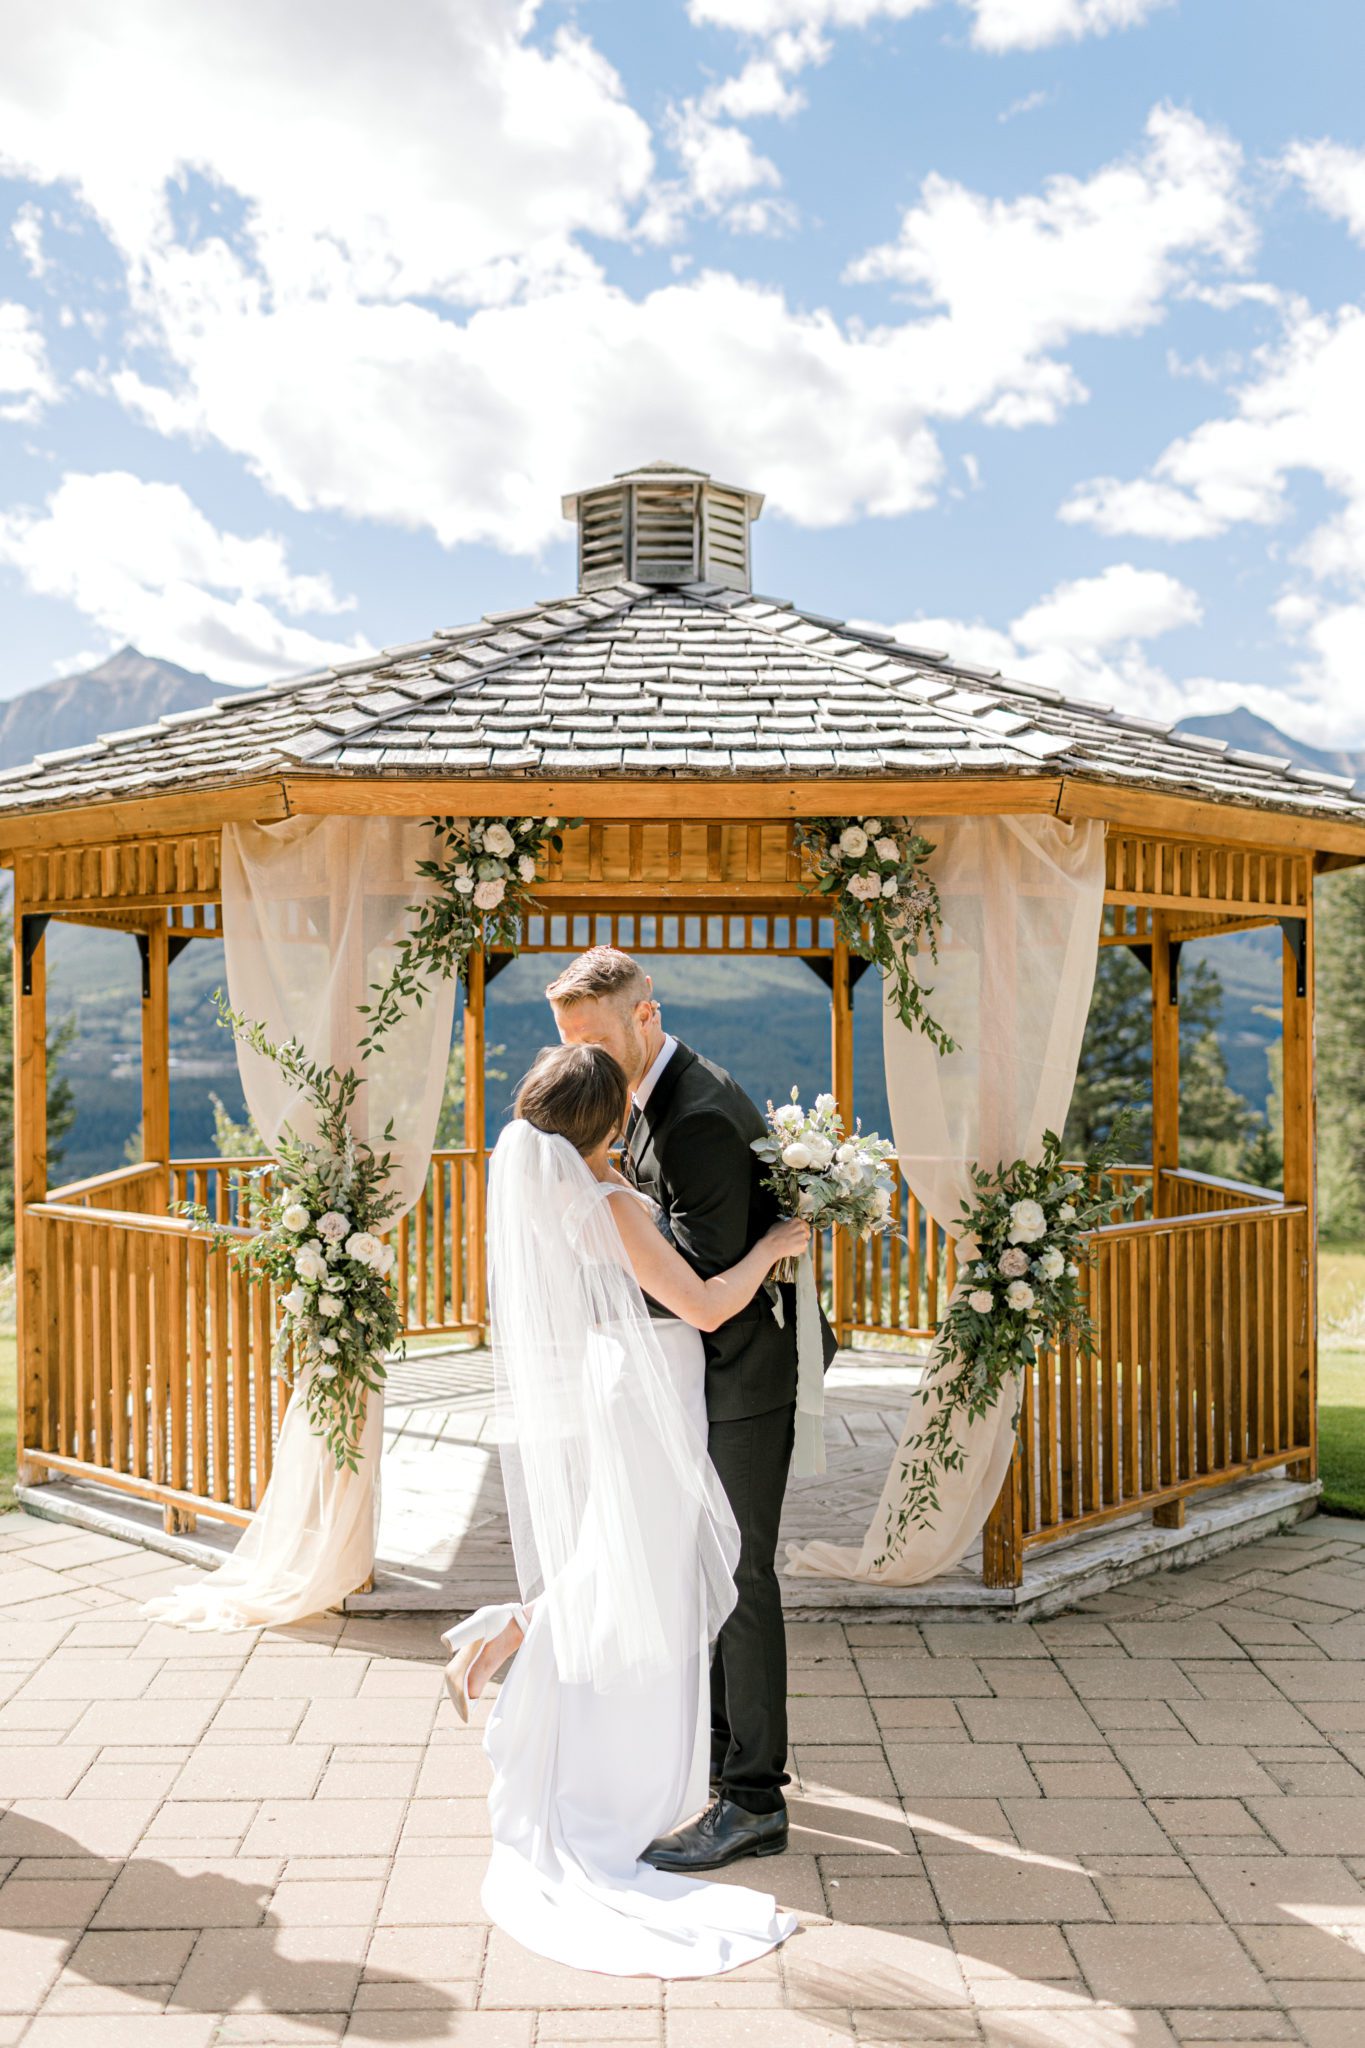 Intimate summer wedding at Silvertip Resort in Canmore, gazebo wedding ceremony inspiration.